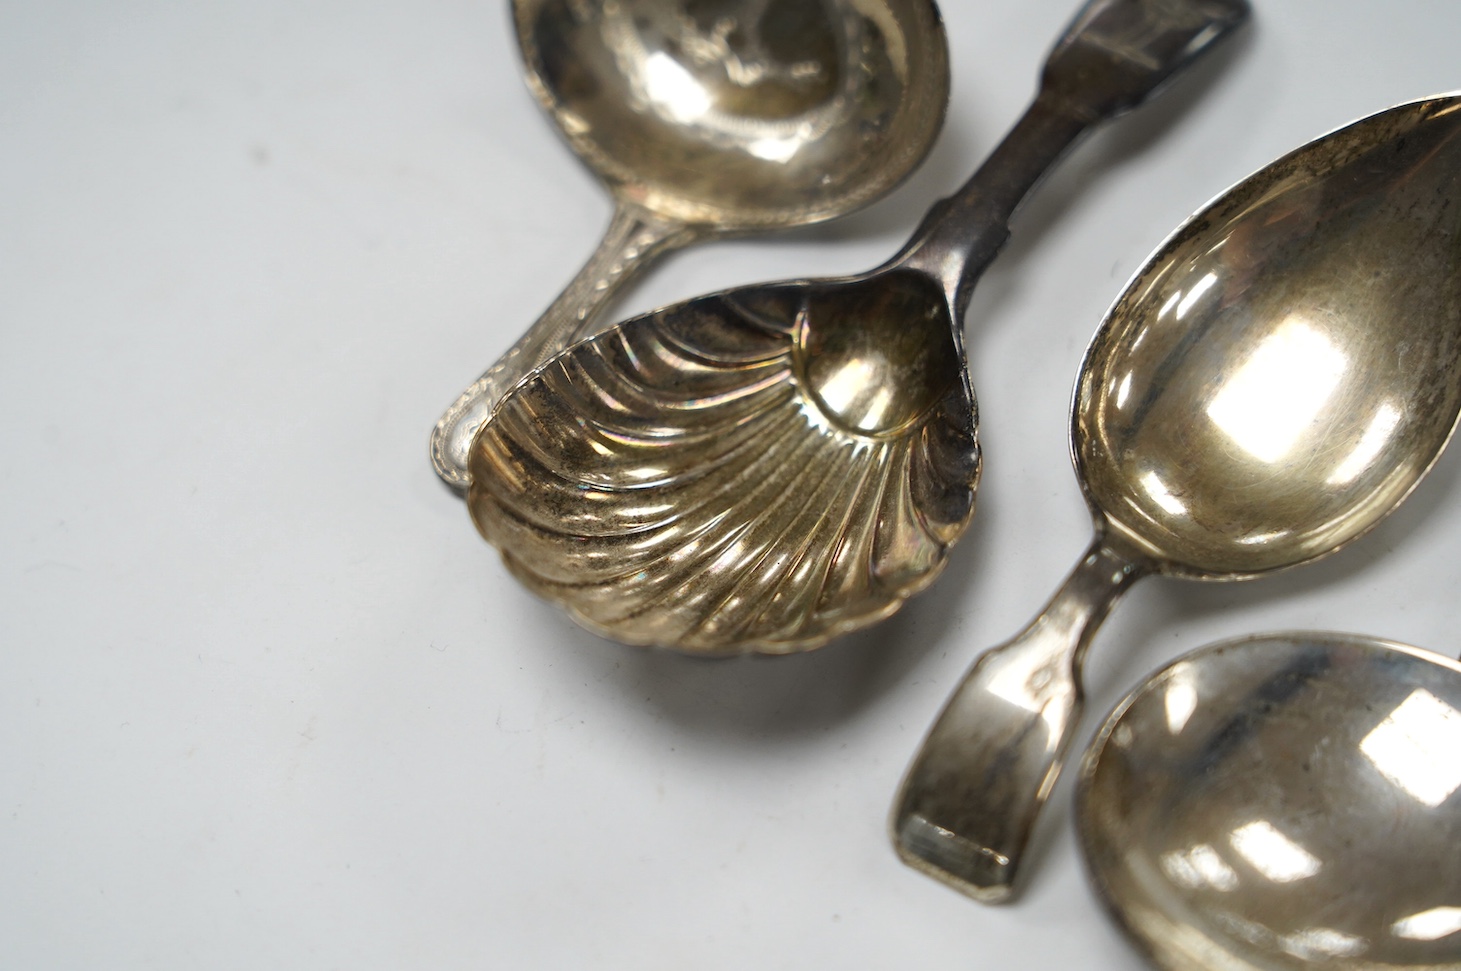 Five assorted silver caddy spoons, including shovel bowl by Cocks & Bettridge, Birmingham, 1810, 61mm, leaf bowl by William Pugh, Birmingham, 1814, Eley & Fearn, London, 1804, bright cut engraved bowl, George Baskerville